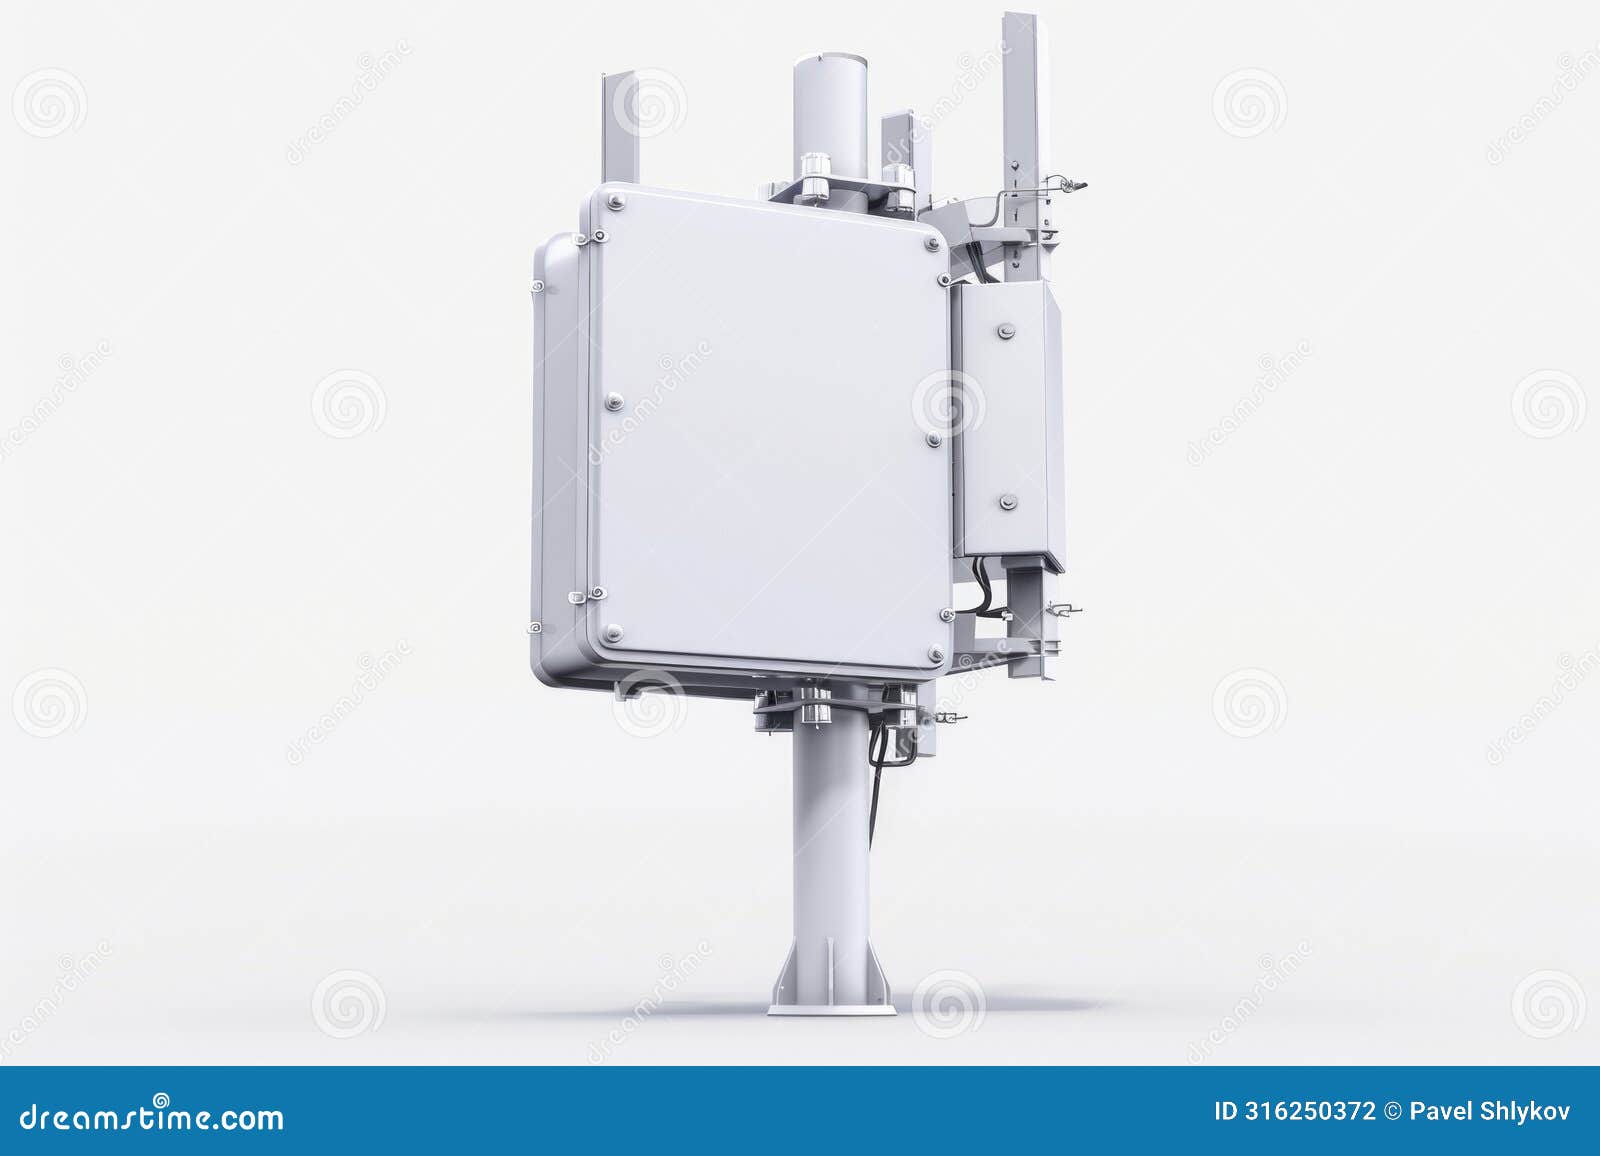 telecommunication pole of 4g and 5g cellular. base station or base transceiver station. wireless communication antenna